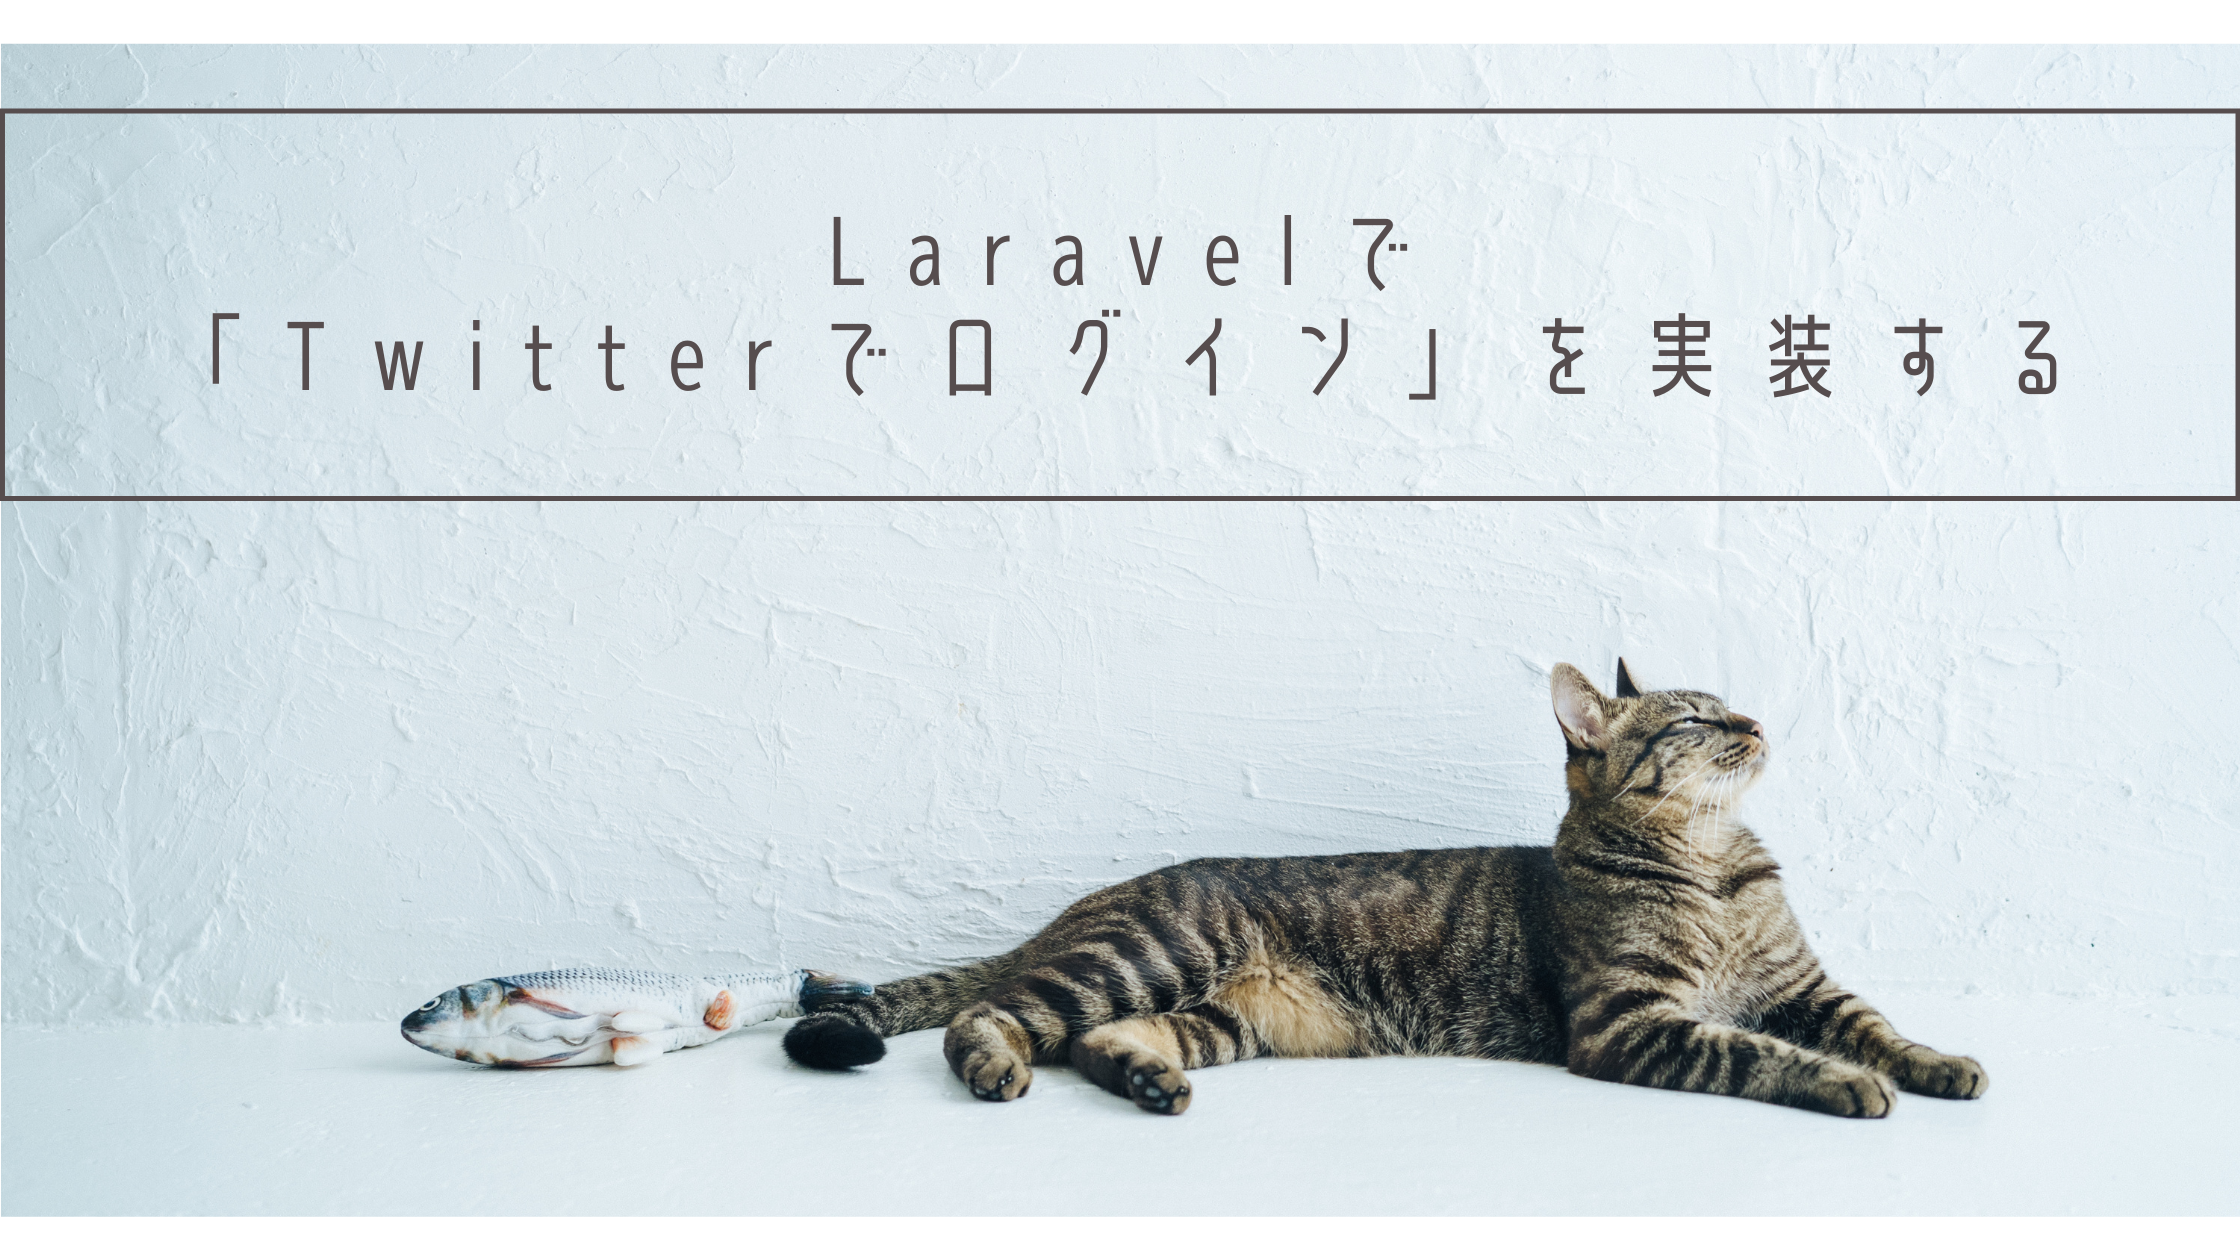 LaravelでTwitterログインを実装する